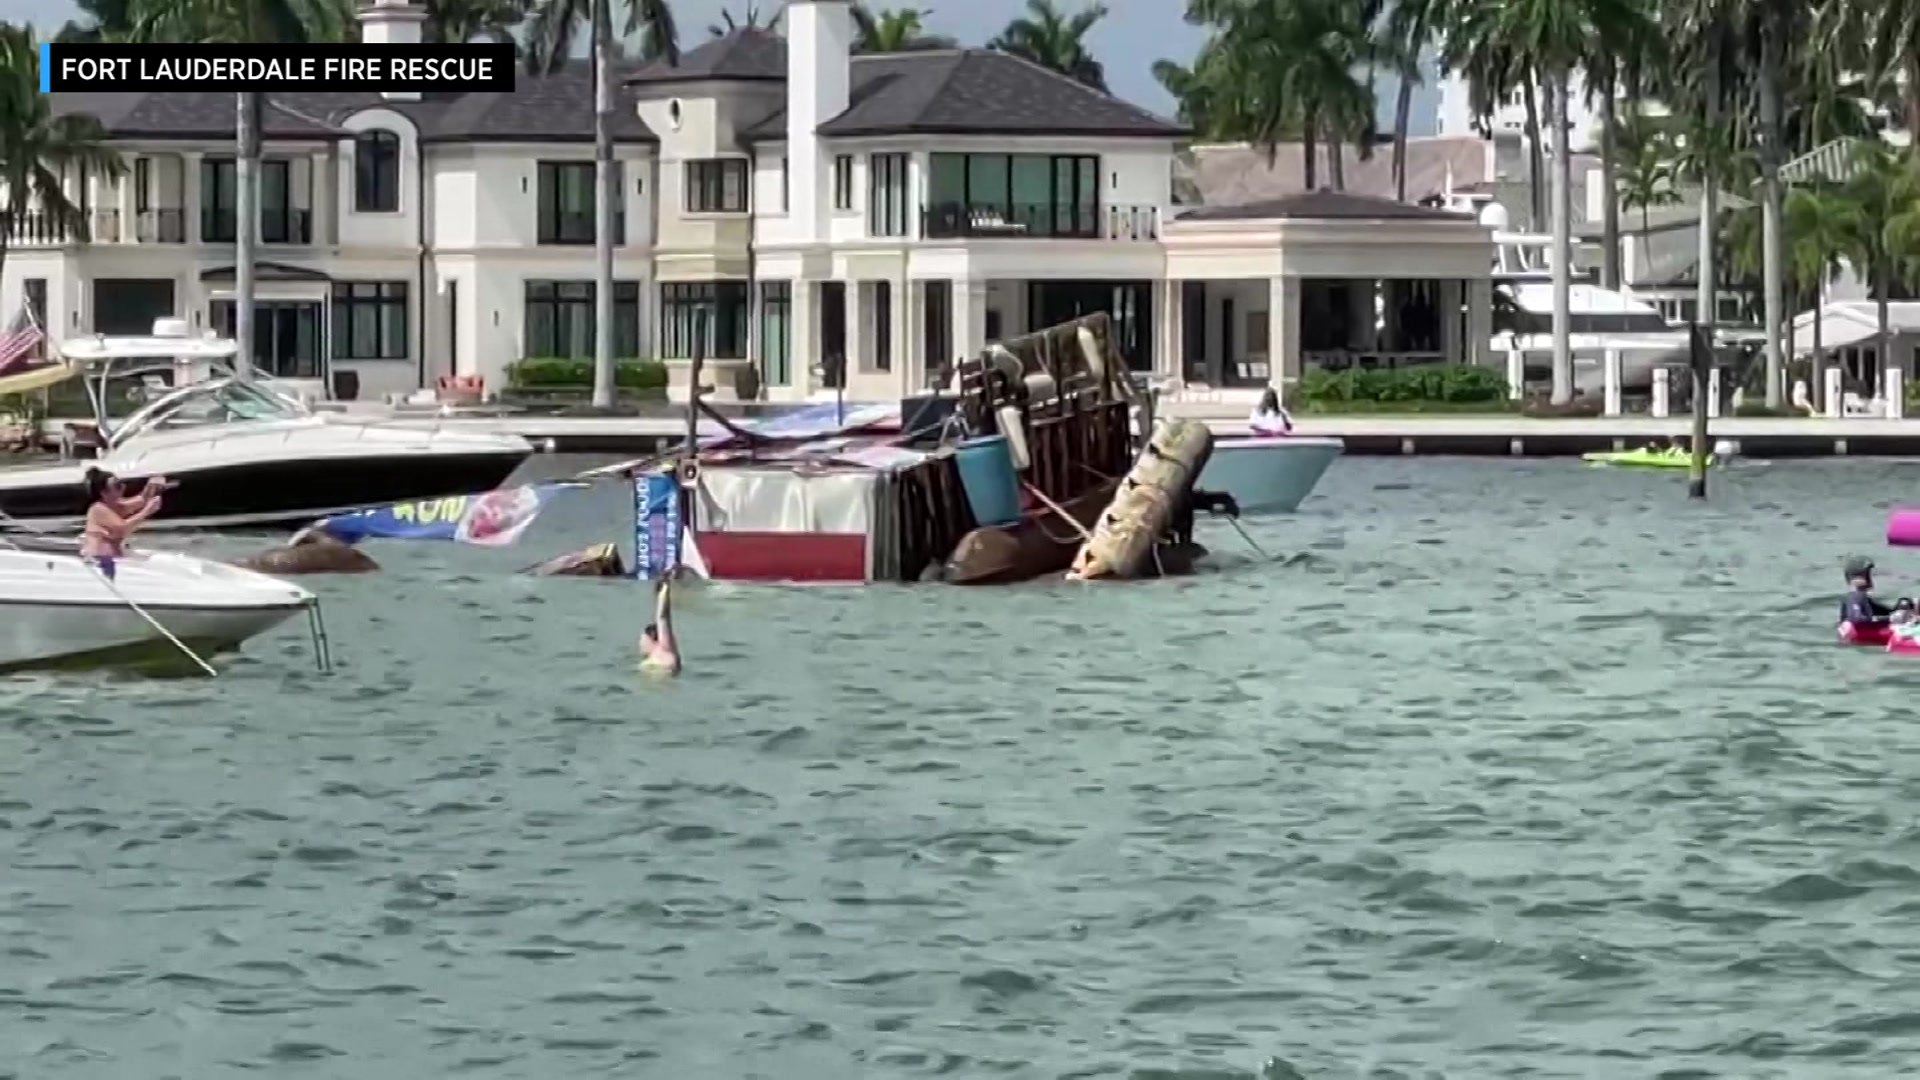 SEE IT: Jay’s Sandbar Food Boat Sinks In Fort Lauderdale